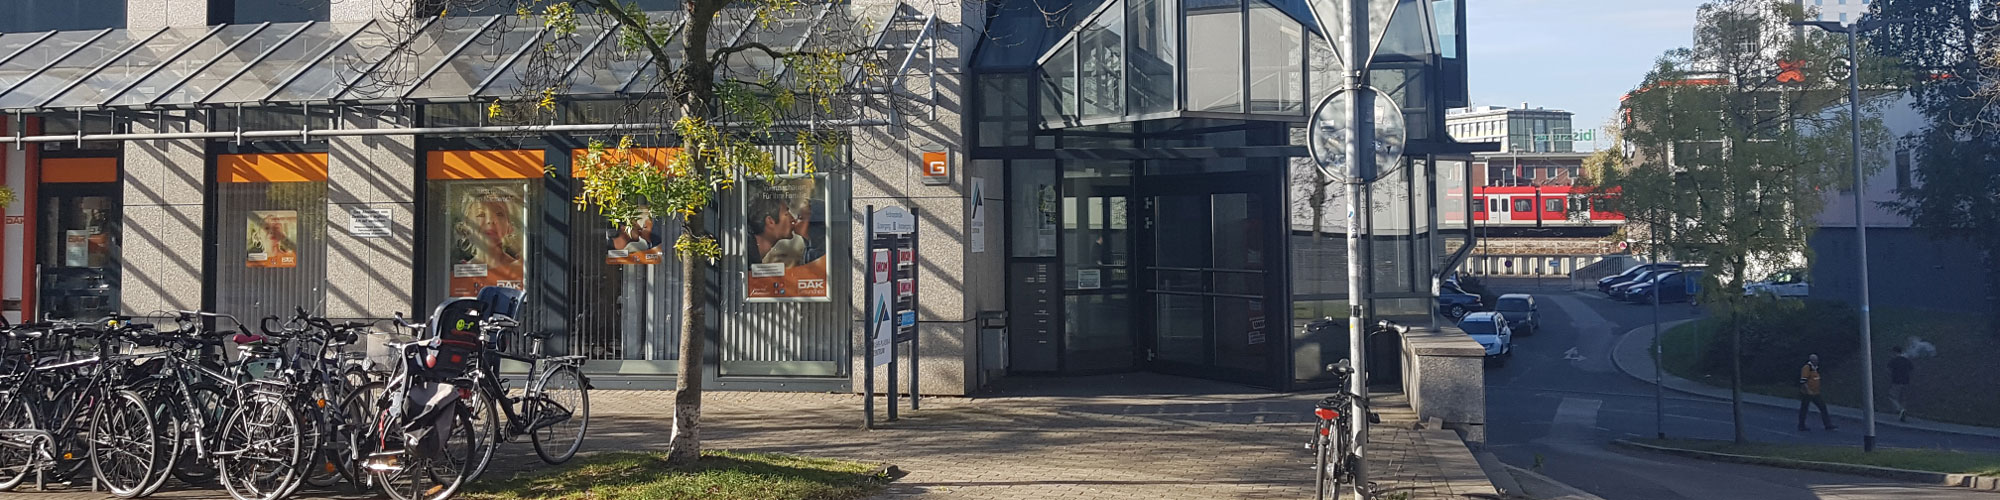 Das UNICUM Office in Bochum